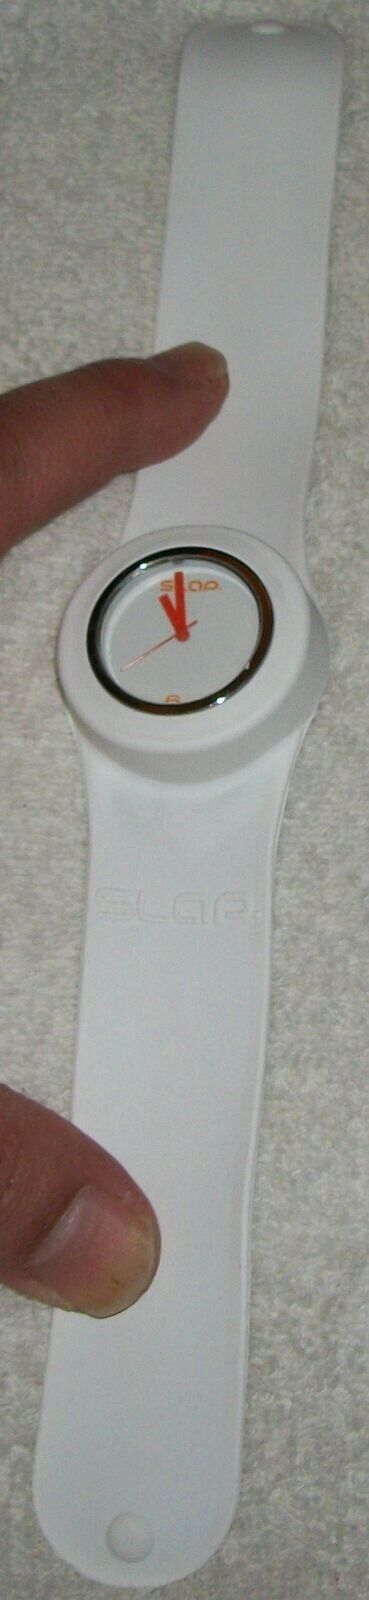 Original Slap Band White  Silicone Rubber White and Orange Watch, New Batt